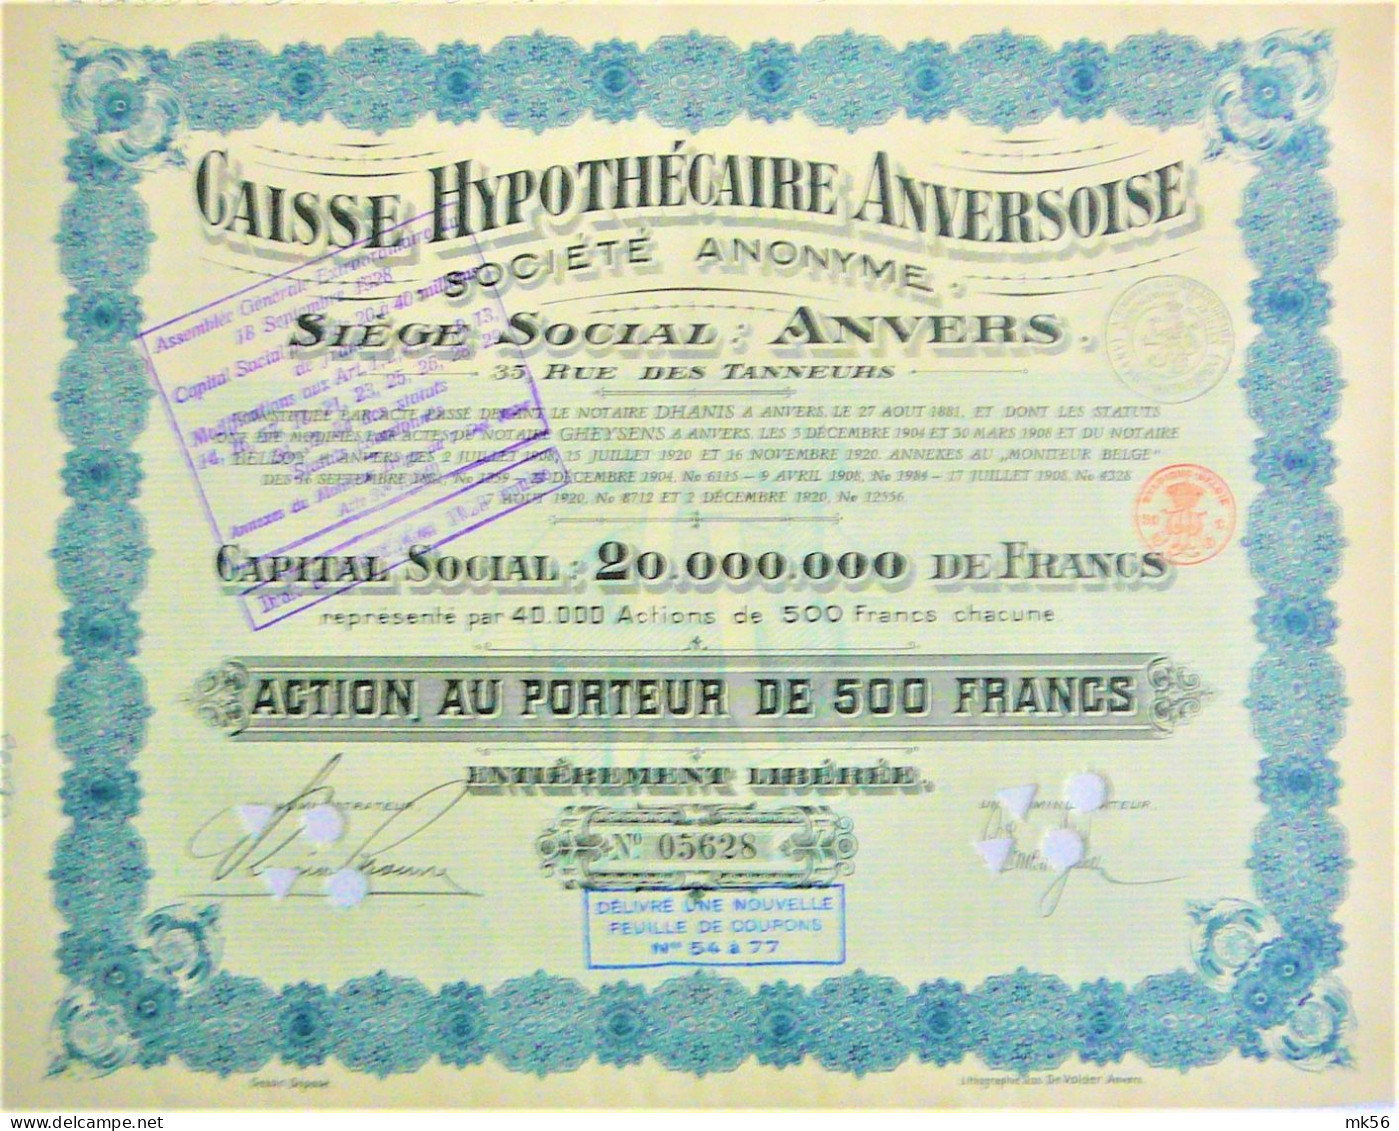 Caisse  Hypothecaire Anversoise (1881)  - Anhyp - Antwerpen - Banque & Assurance